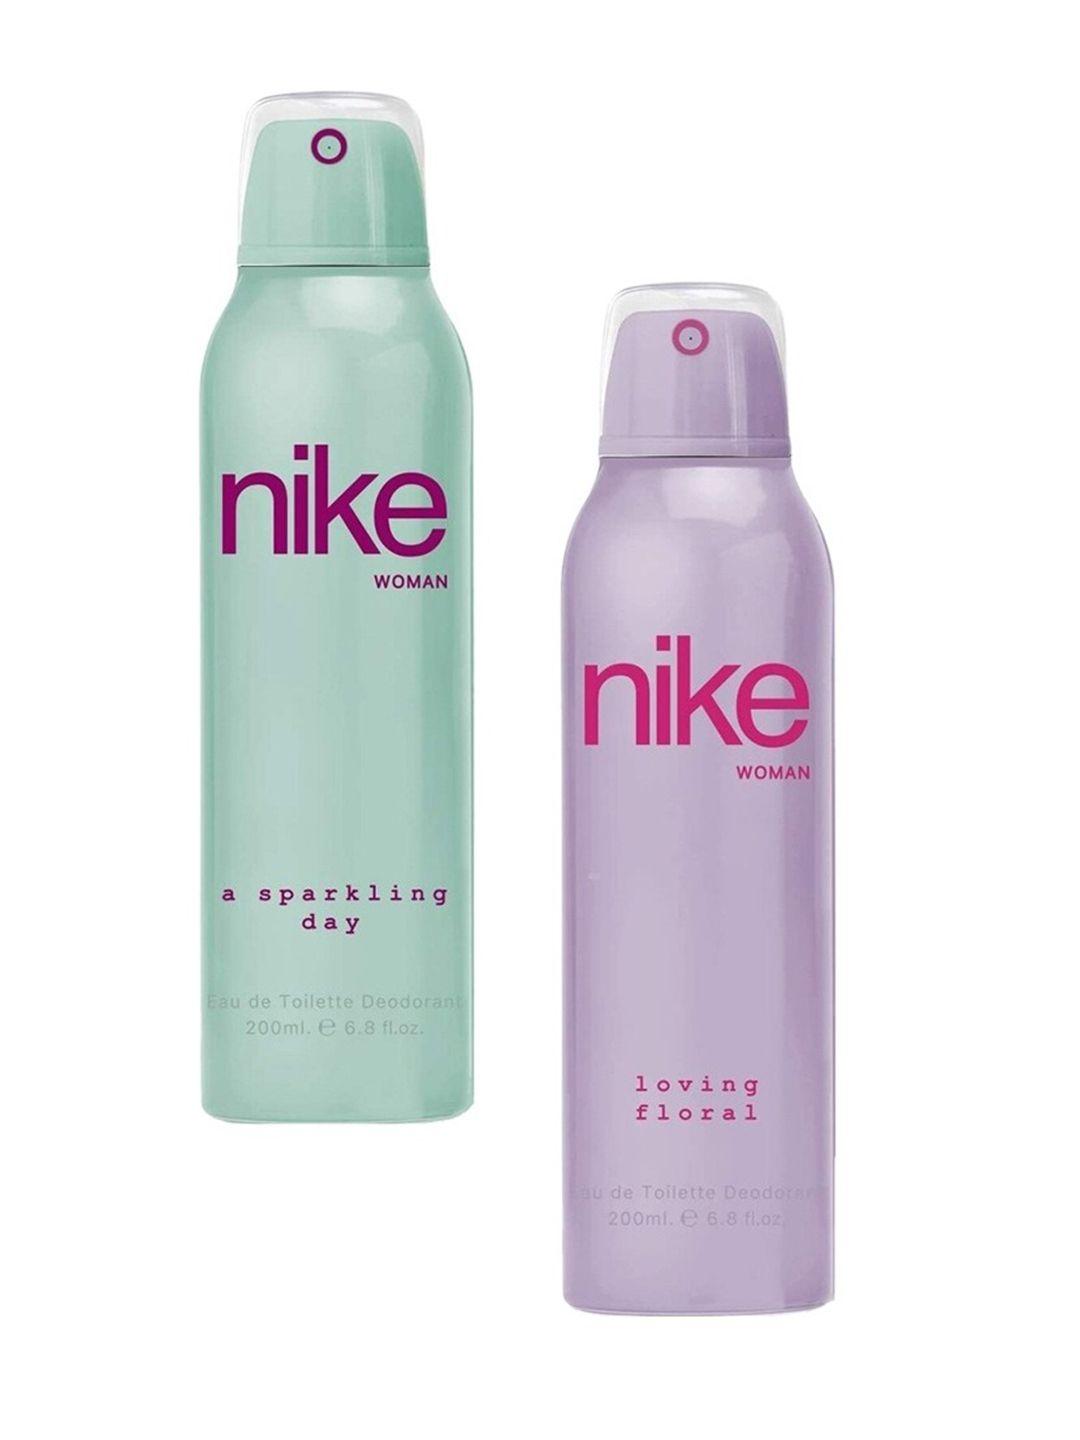 nike-pack-of-2-woman-a-sprakling-day-&-loving-floral-deodorant--200ml-each